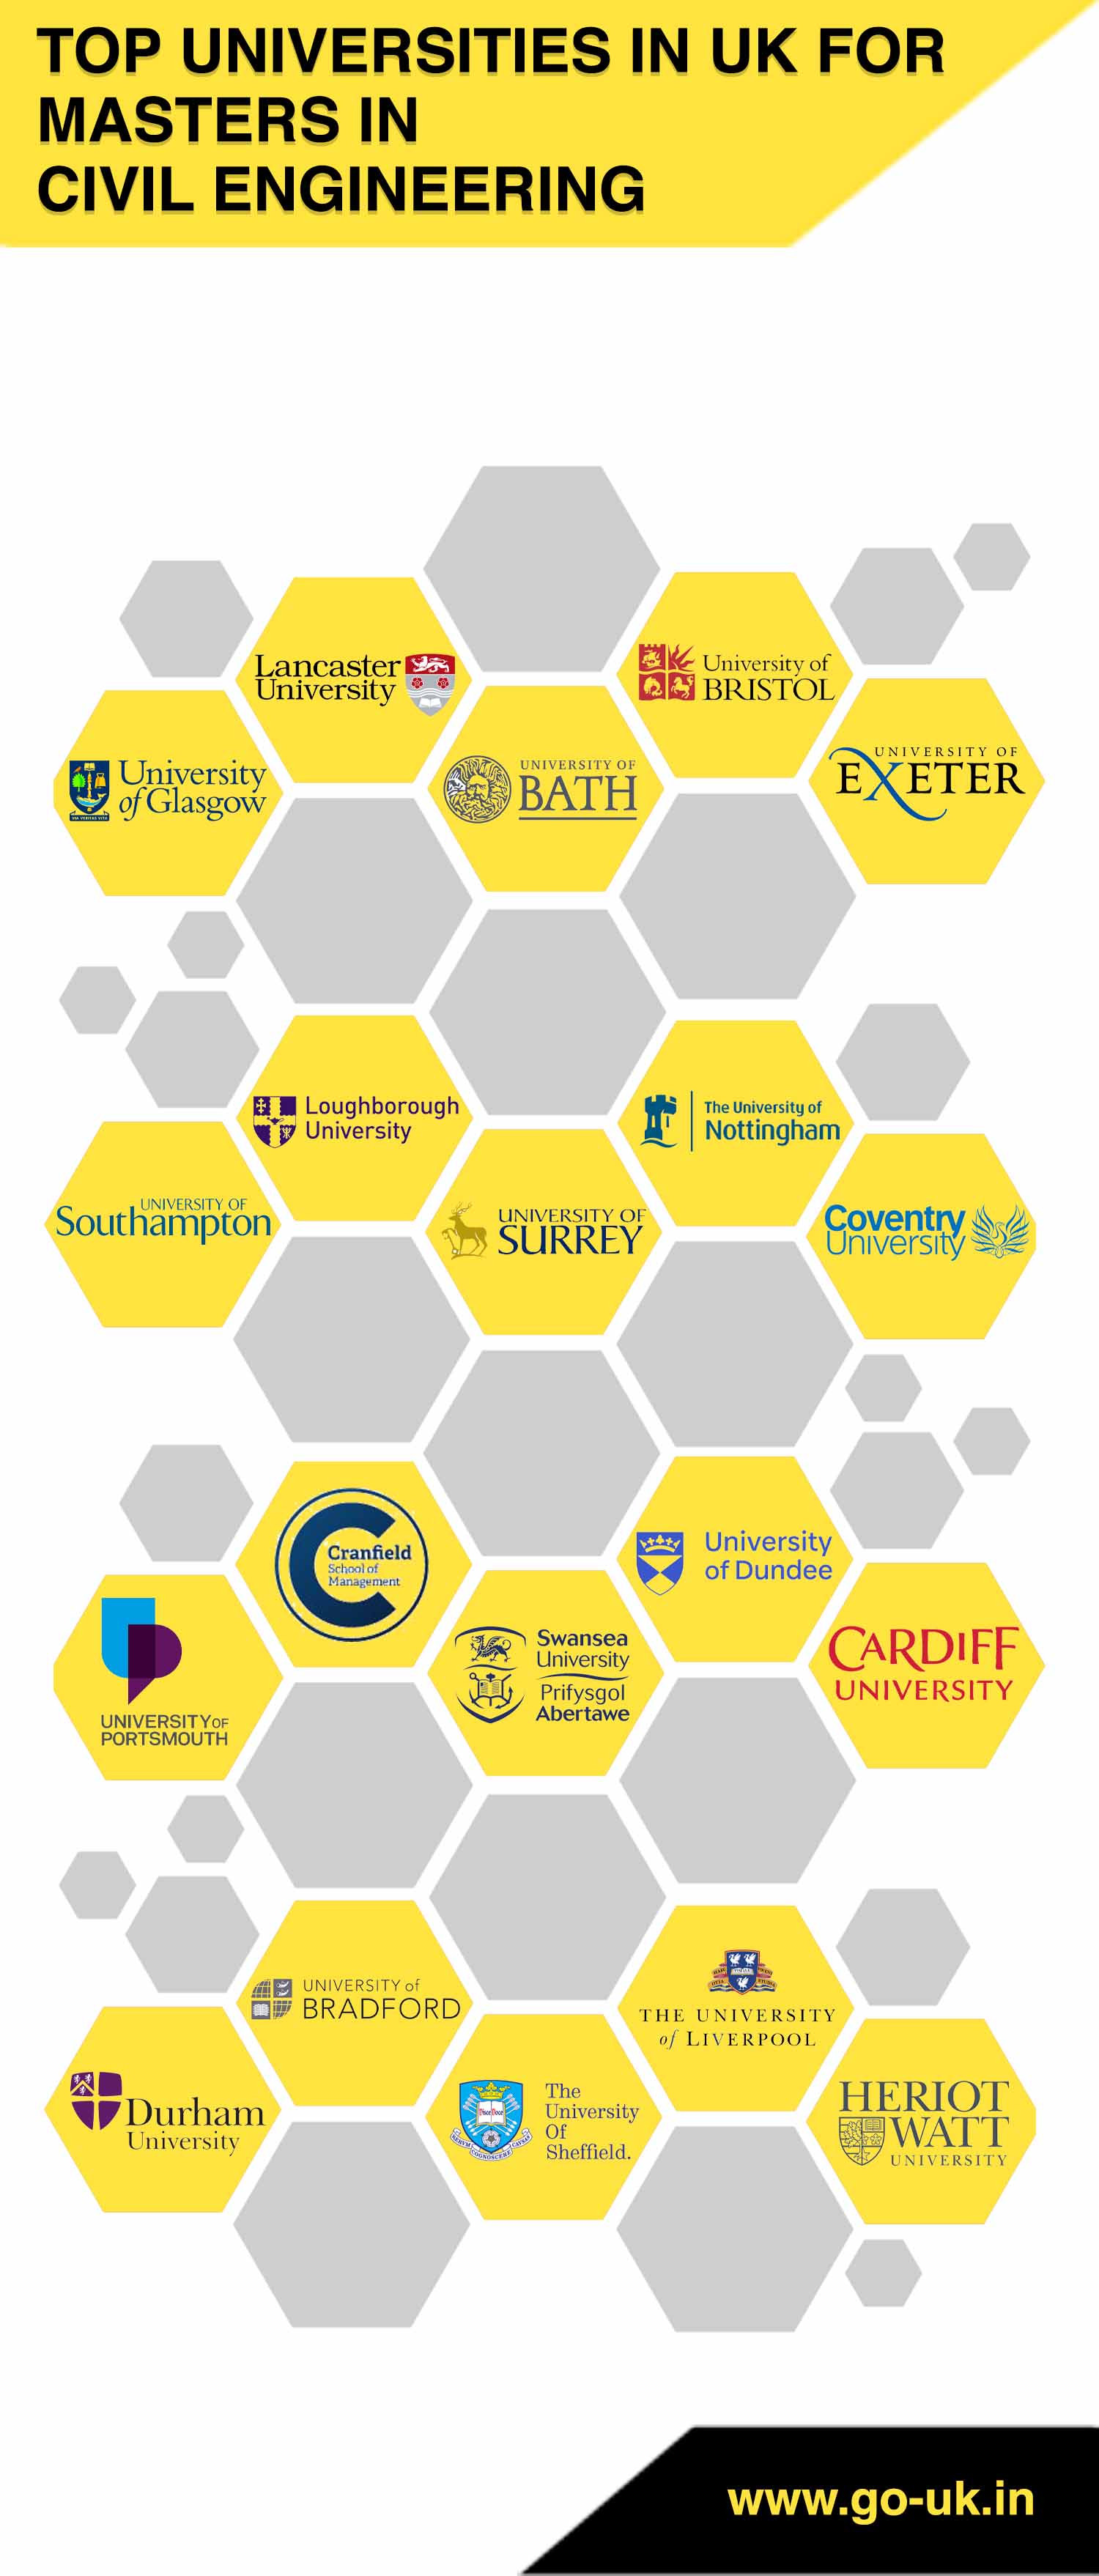 Top Universities in UK for Masters in Civil Engineering